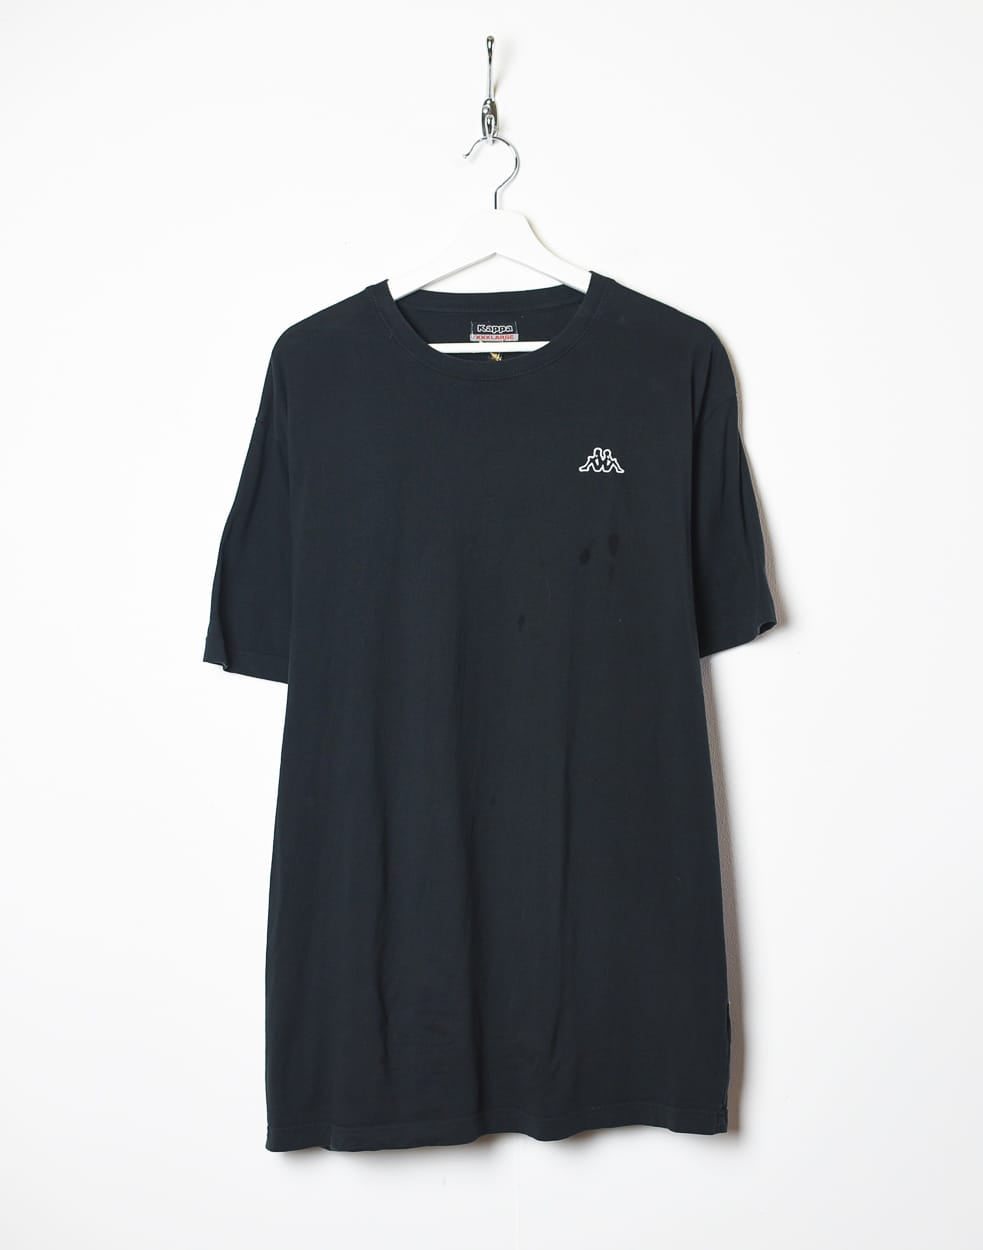 Black Kappa T-Shirt - XX-Large